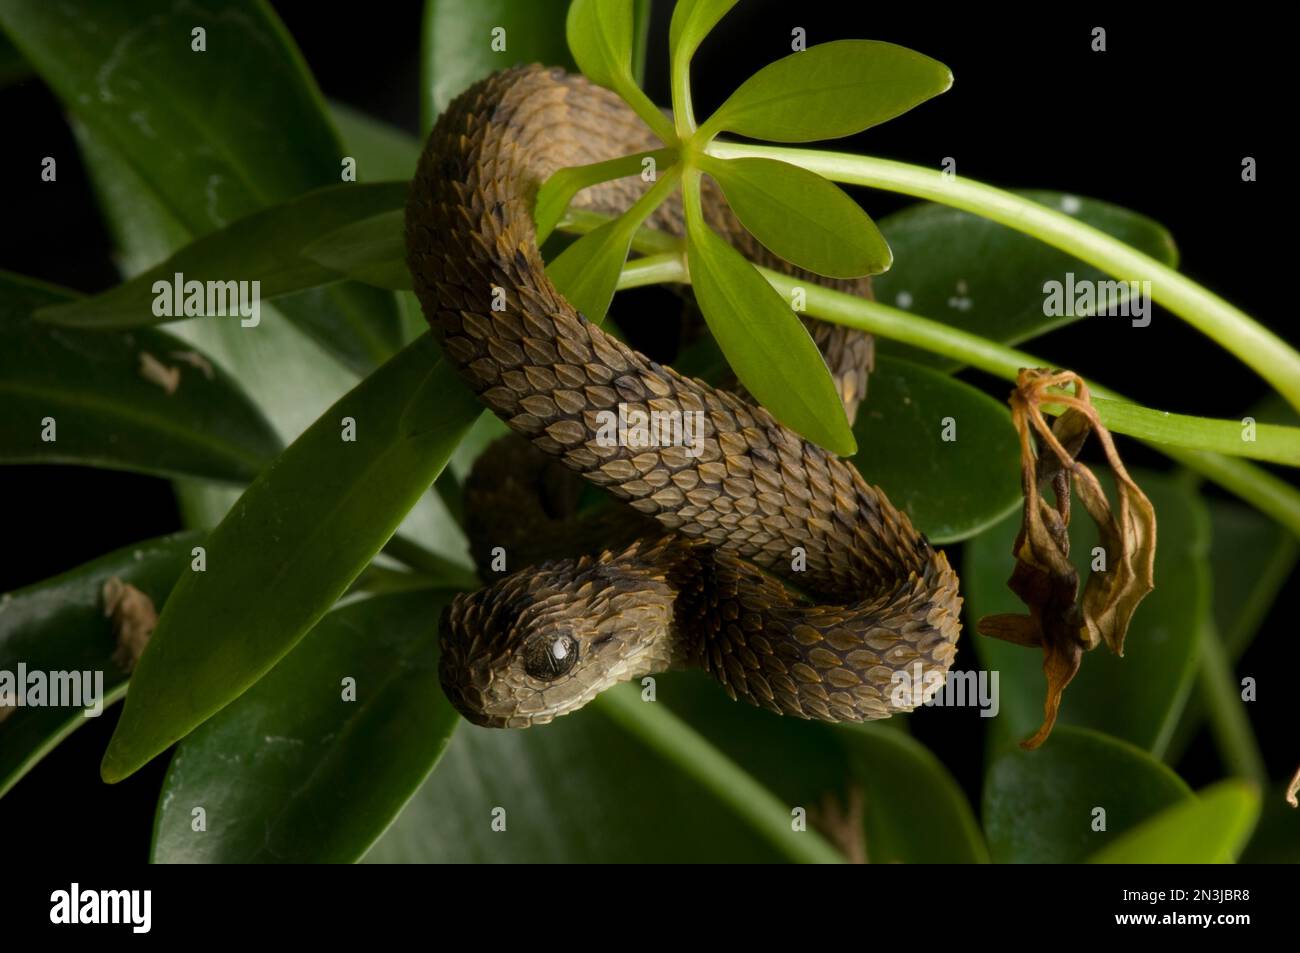 Hairy bush viper (Atheris hispida) on black background Stock Photo - Alamy